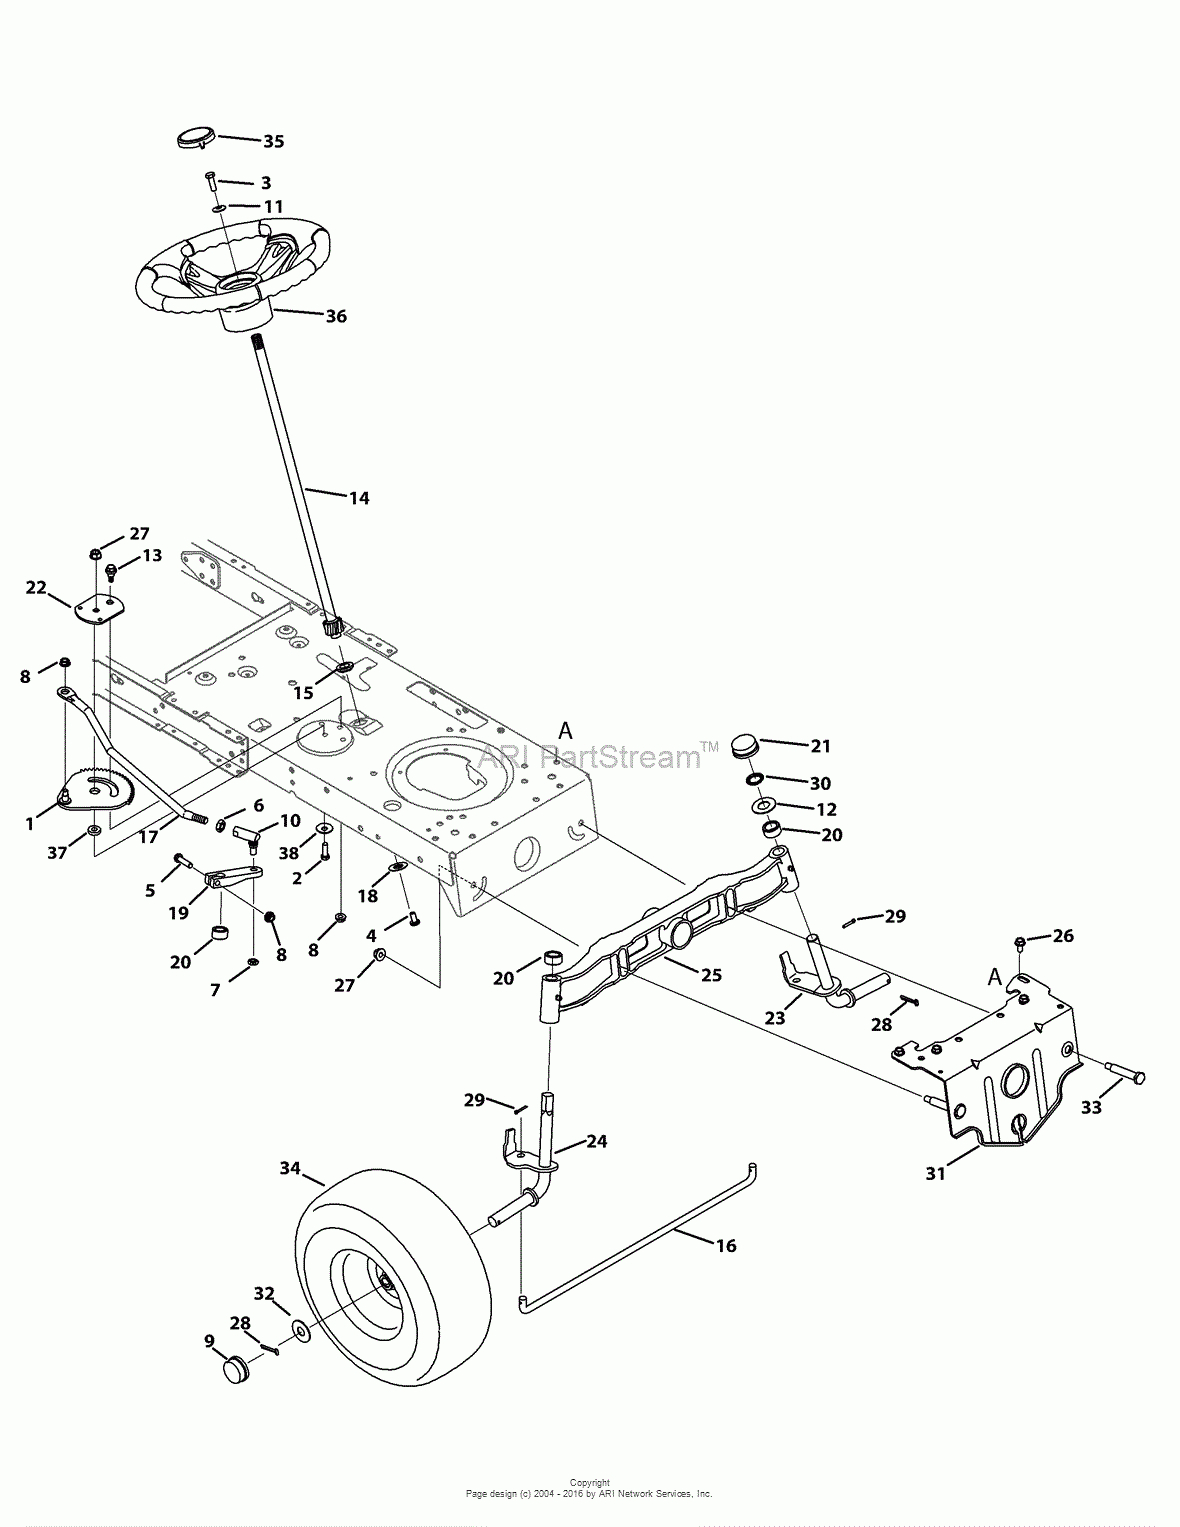 Toro Wheel Horse Ignition Switch Wiring Diagram | Wiring Diagram - Wheel Horse Ignition Switch Wiring Diagram